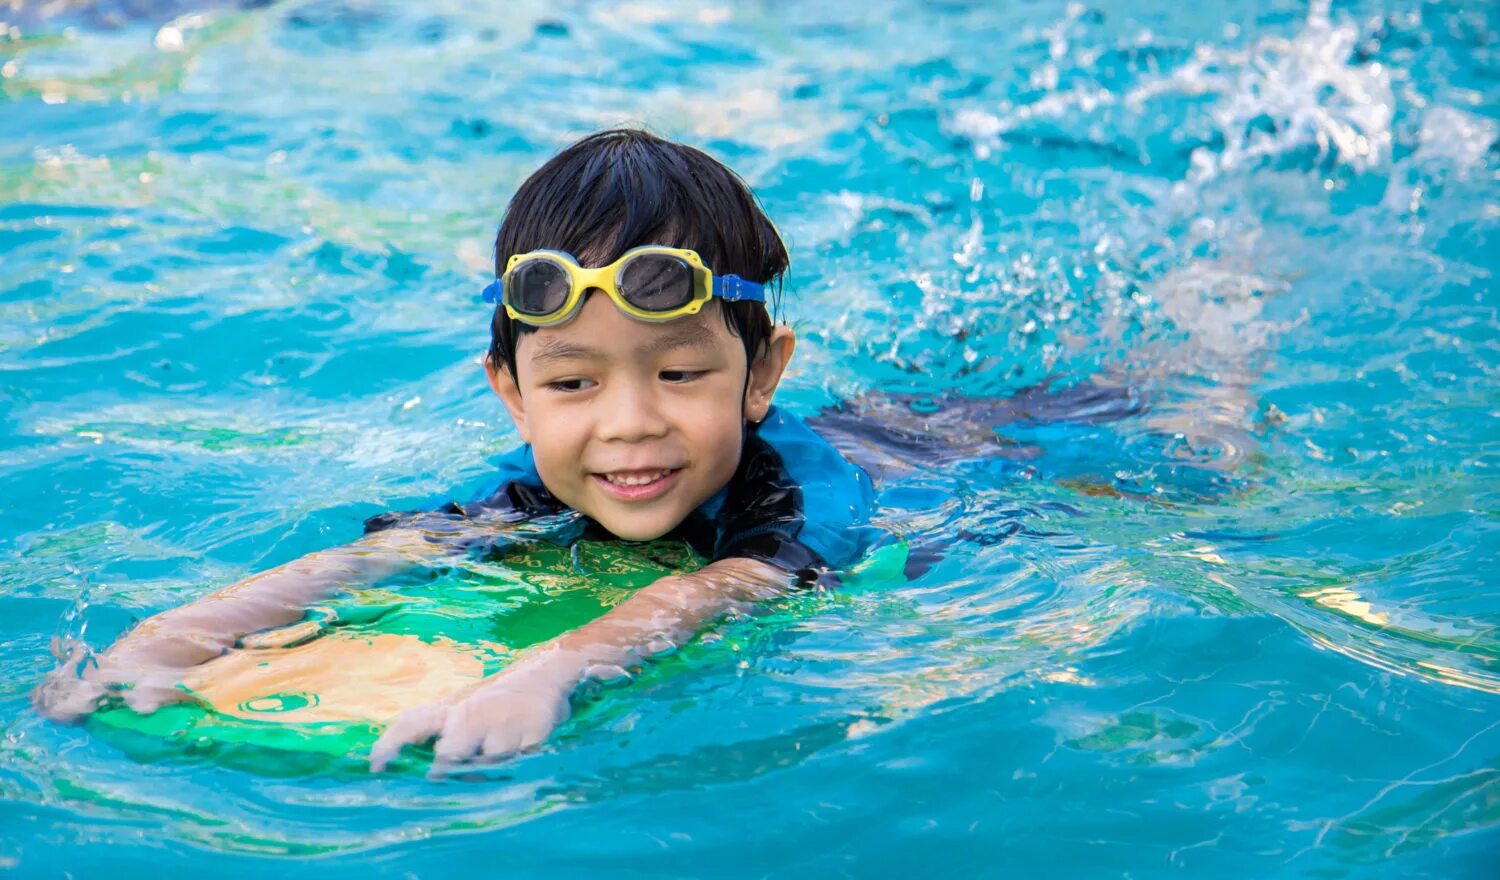 He swims very well. Плавание дети. Плавание детей дошкольников. Дети плавают в бассейне креатив. Swim для детей.